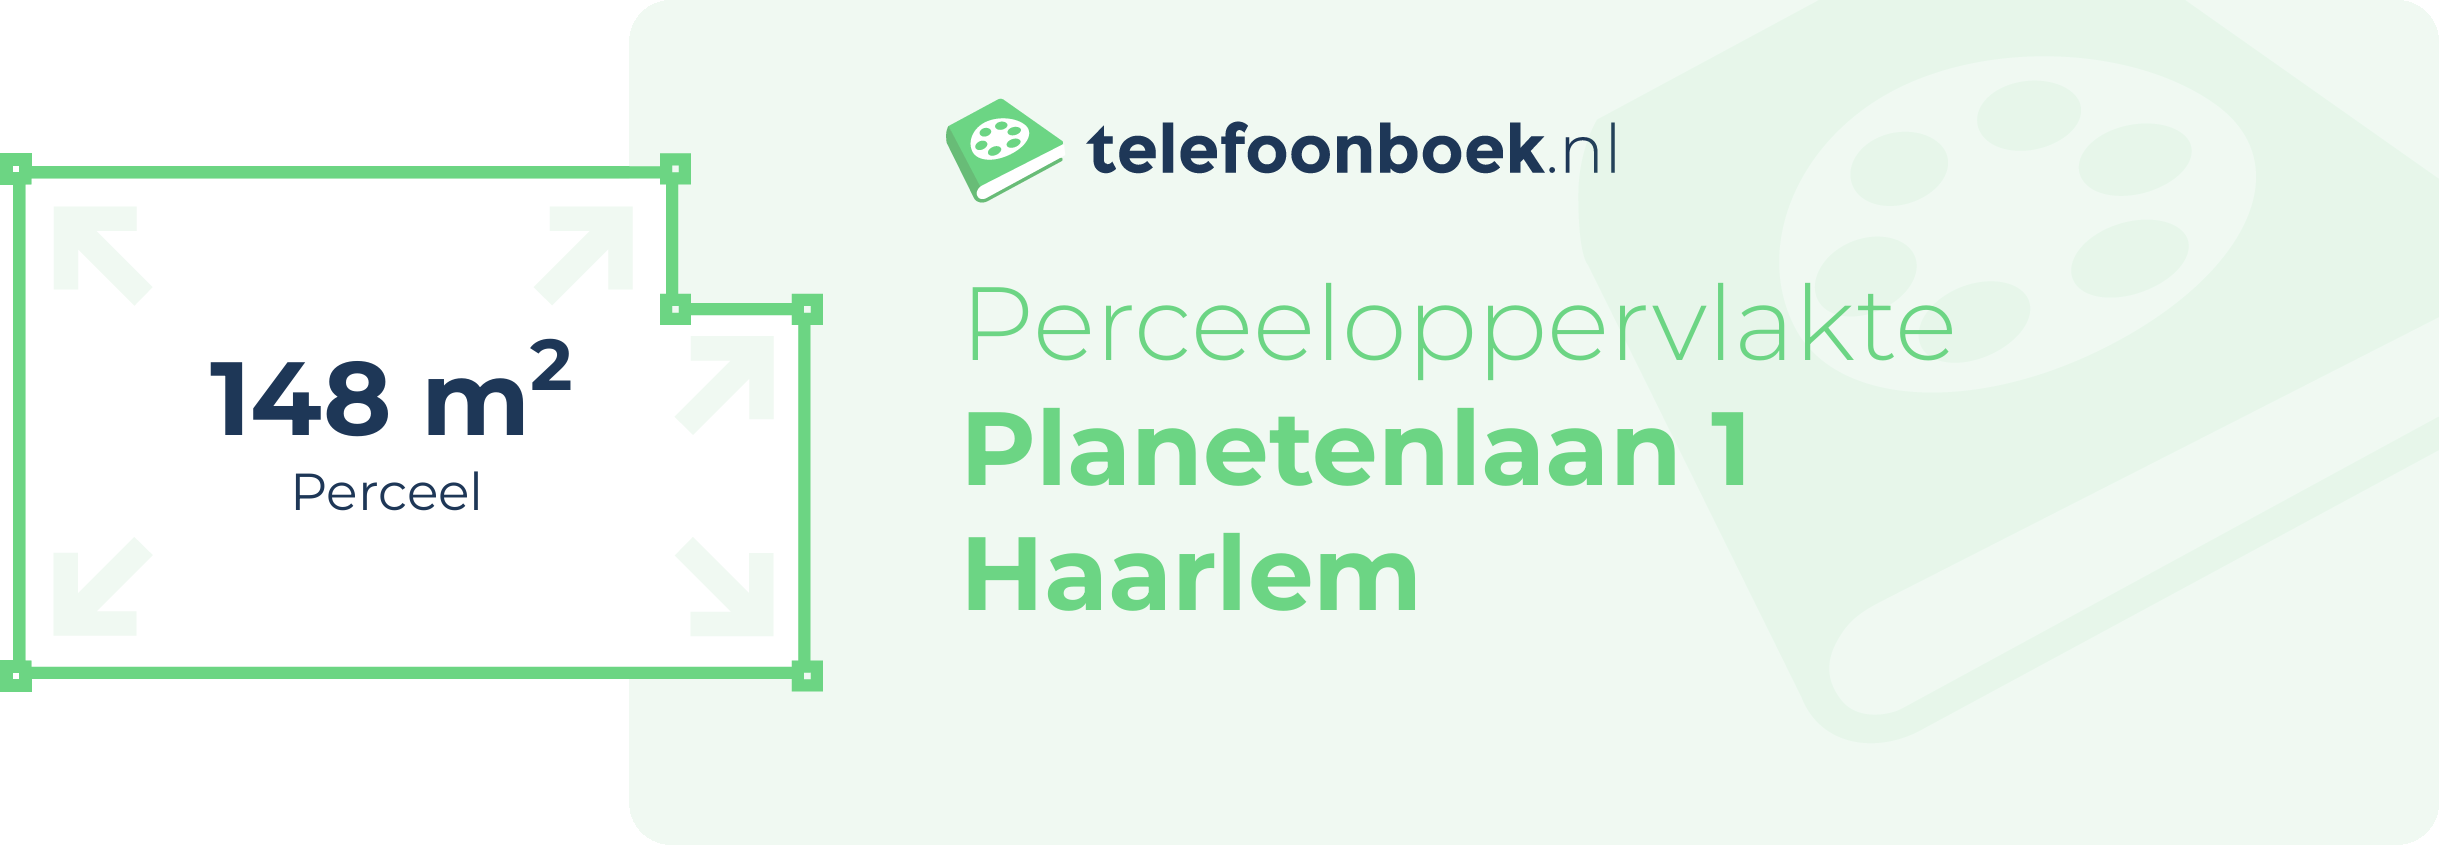 Perceeloppervlakte Planetenlaan 1 Haarlem